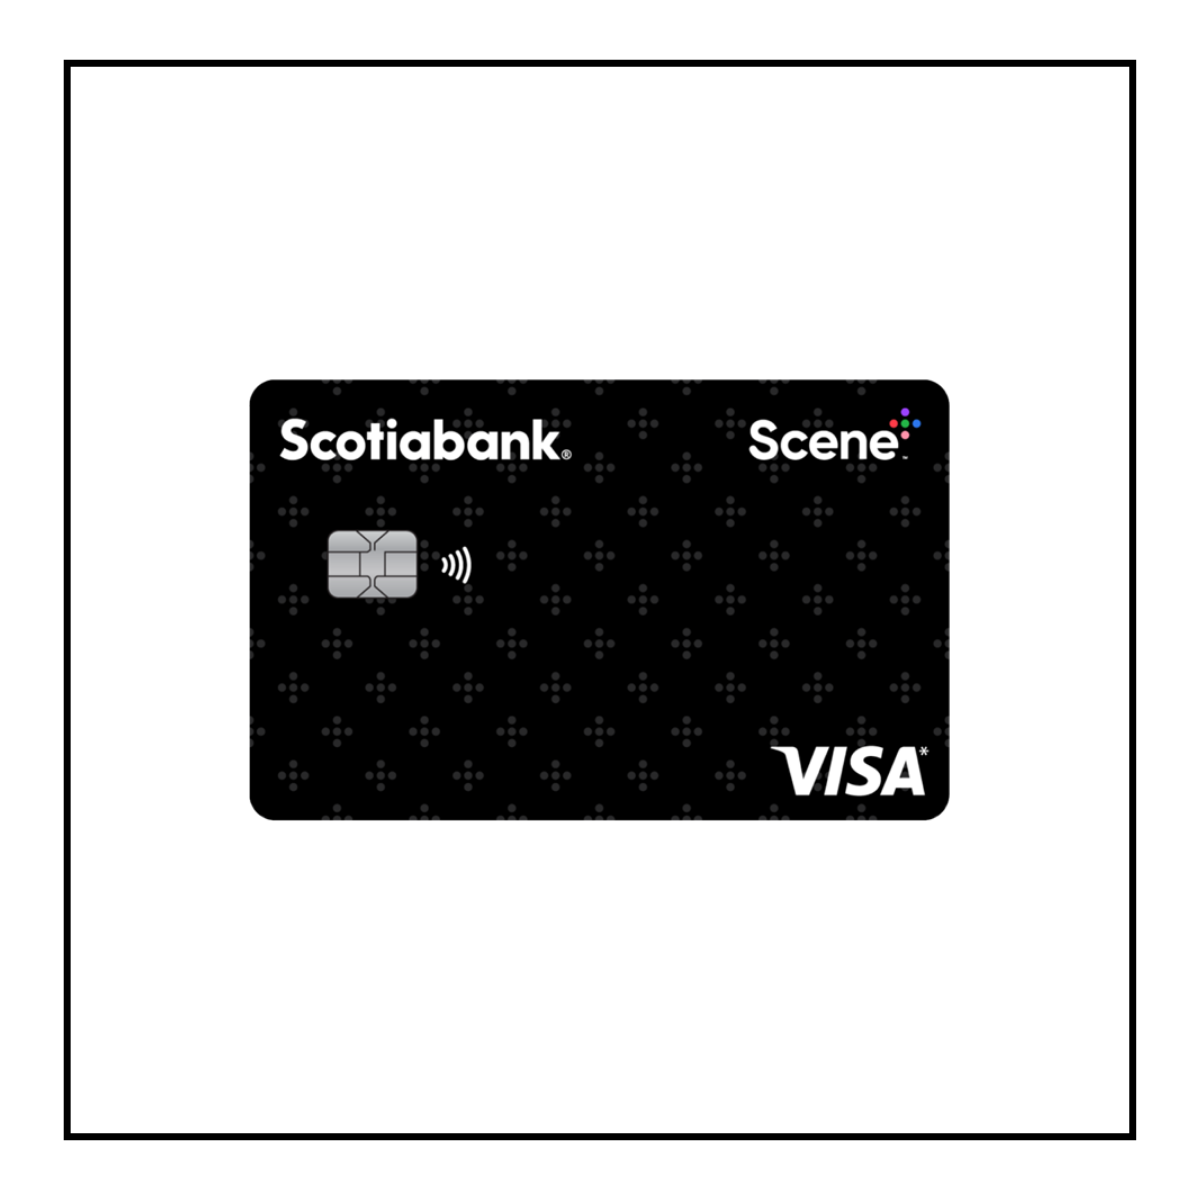 scotiabank scene visa card travel insurance